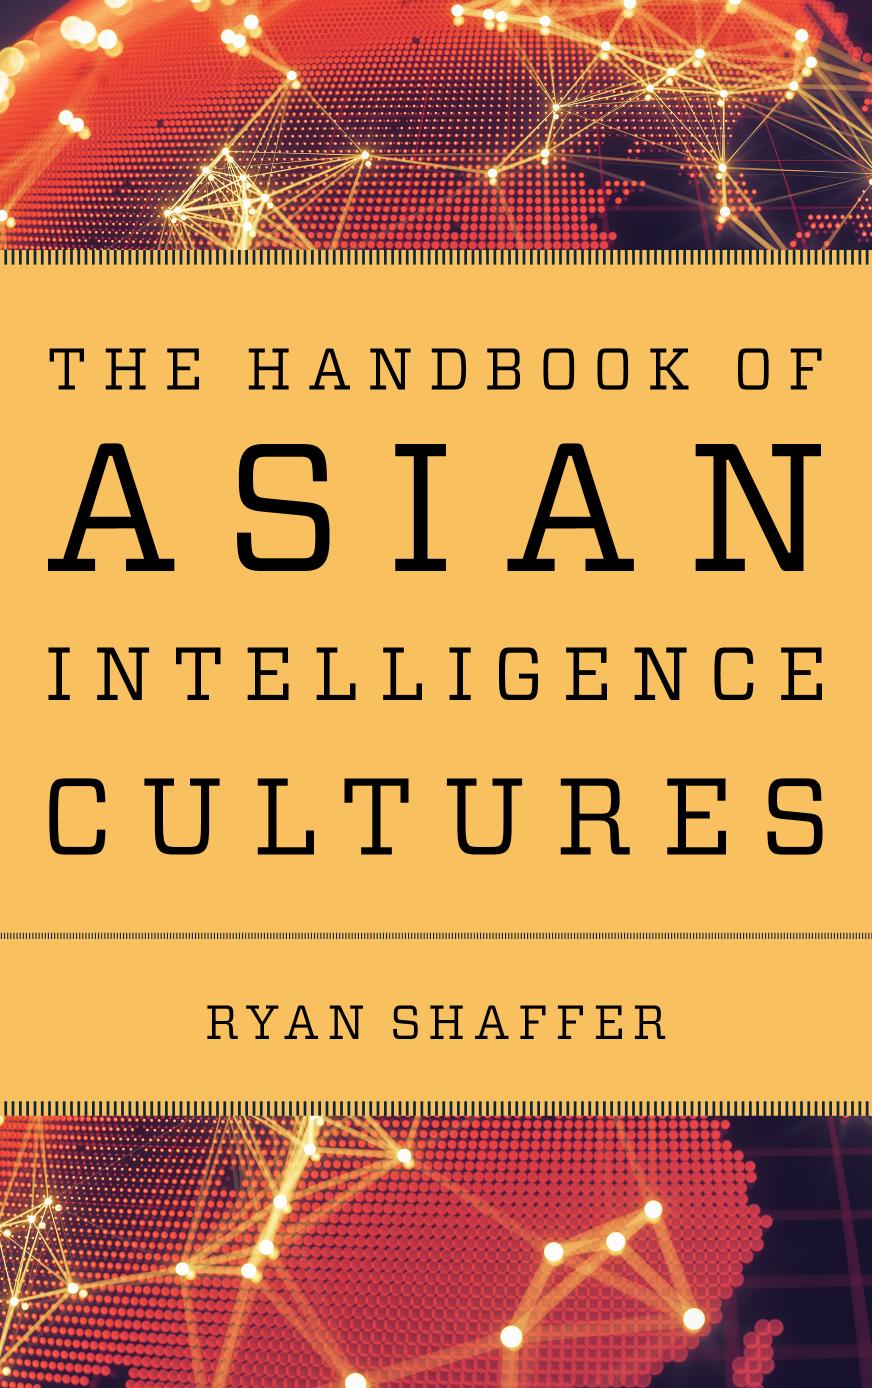 The Handbook of Asian Intelligence Cultures by Ryan Shaffer (editor)